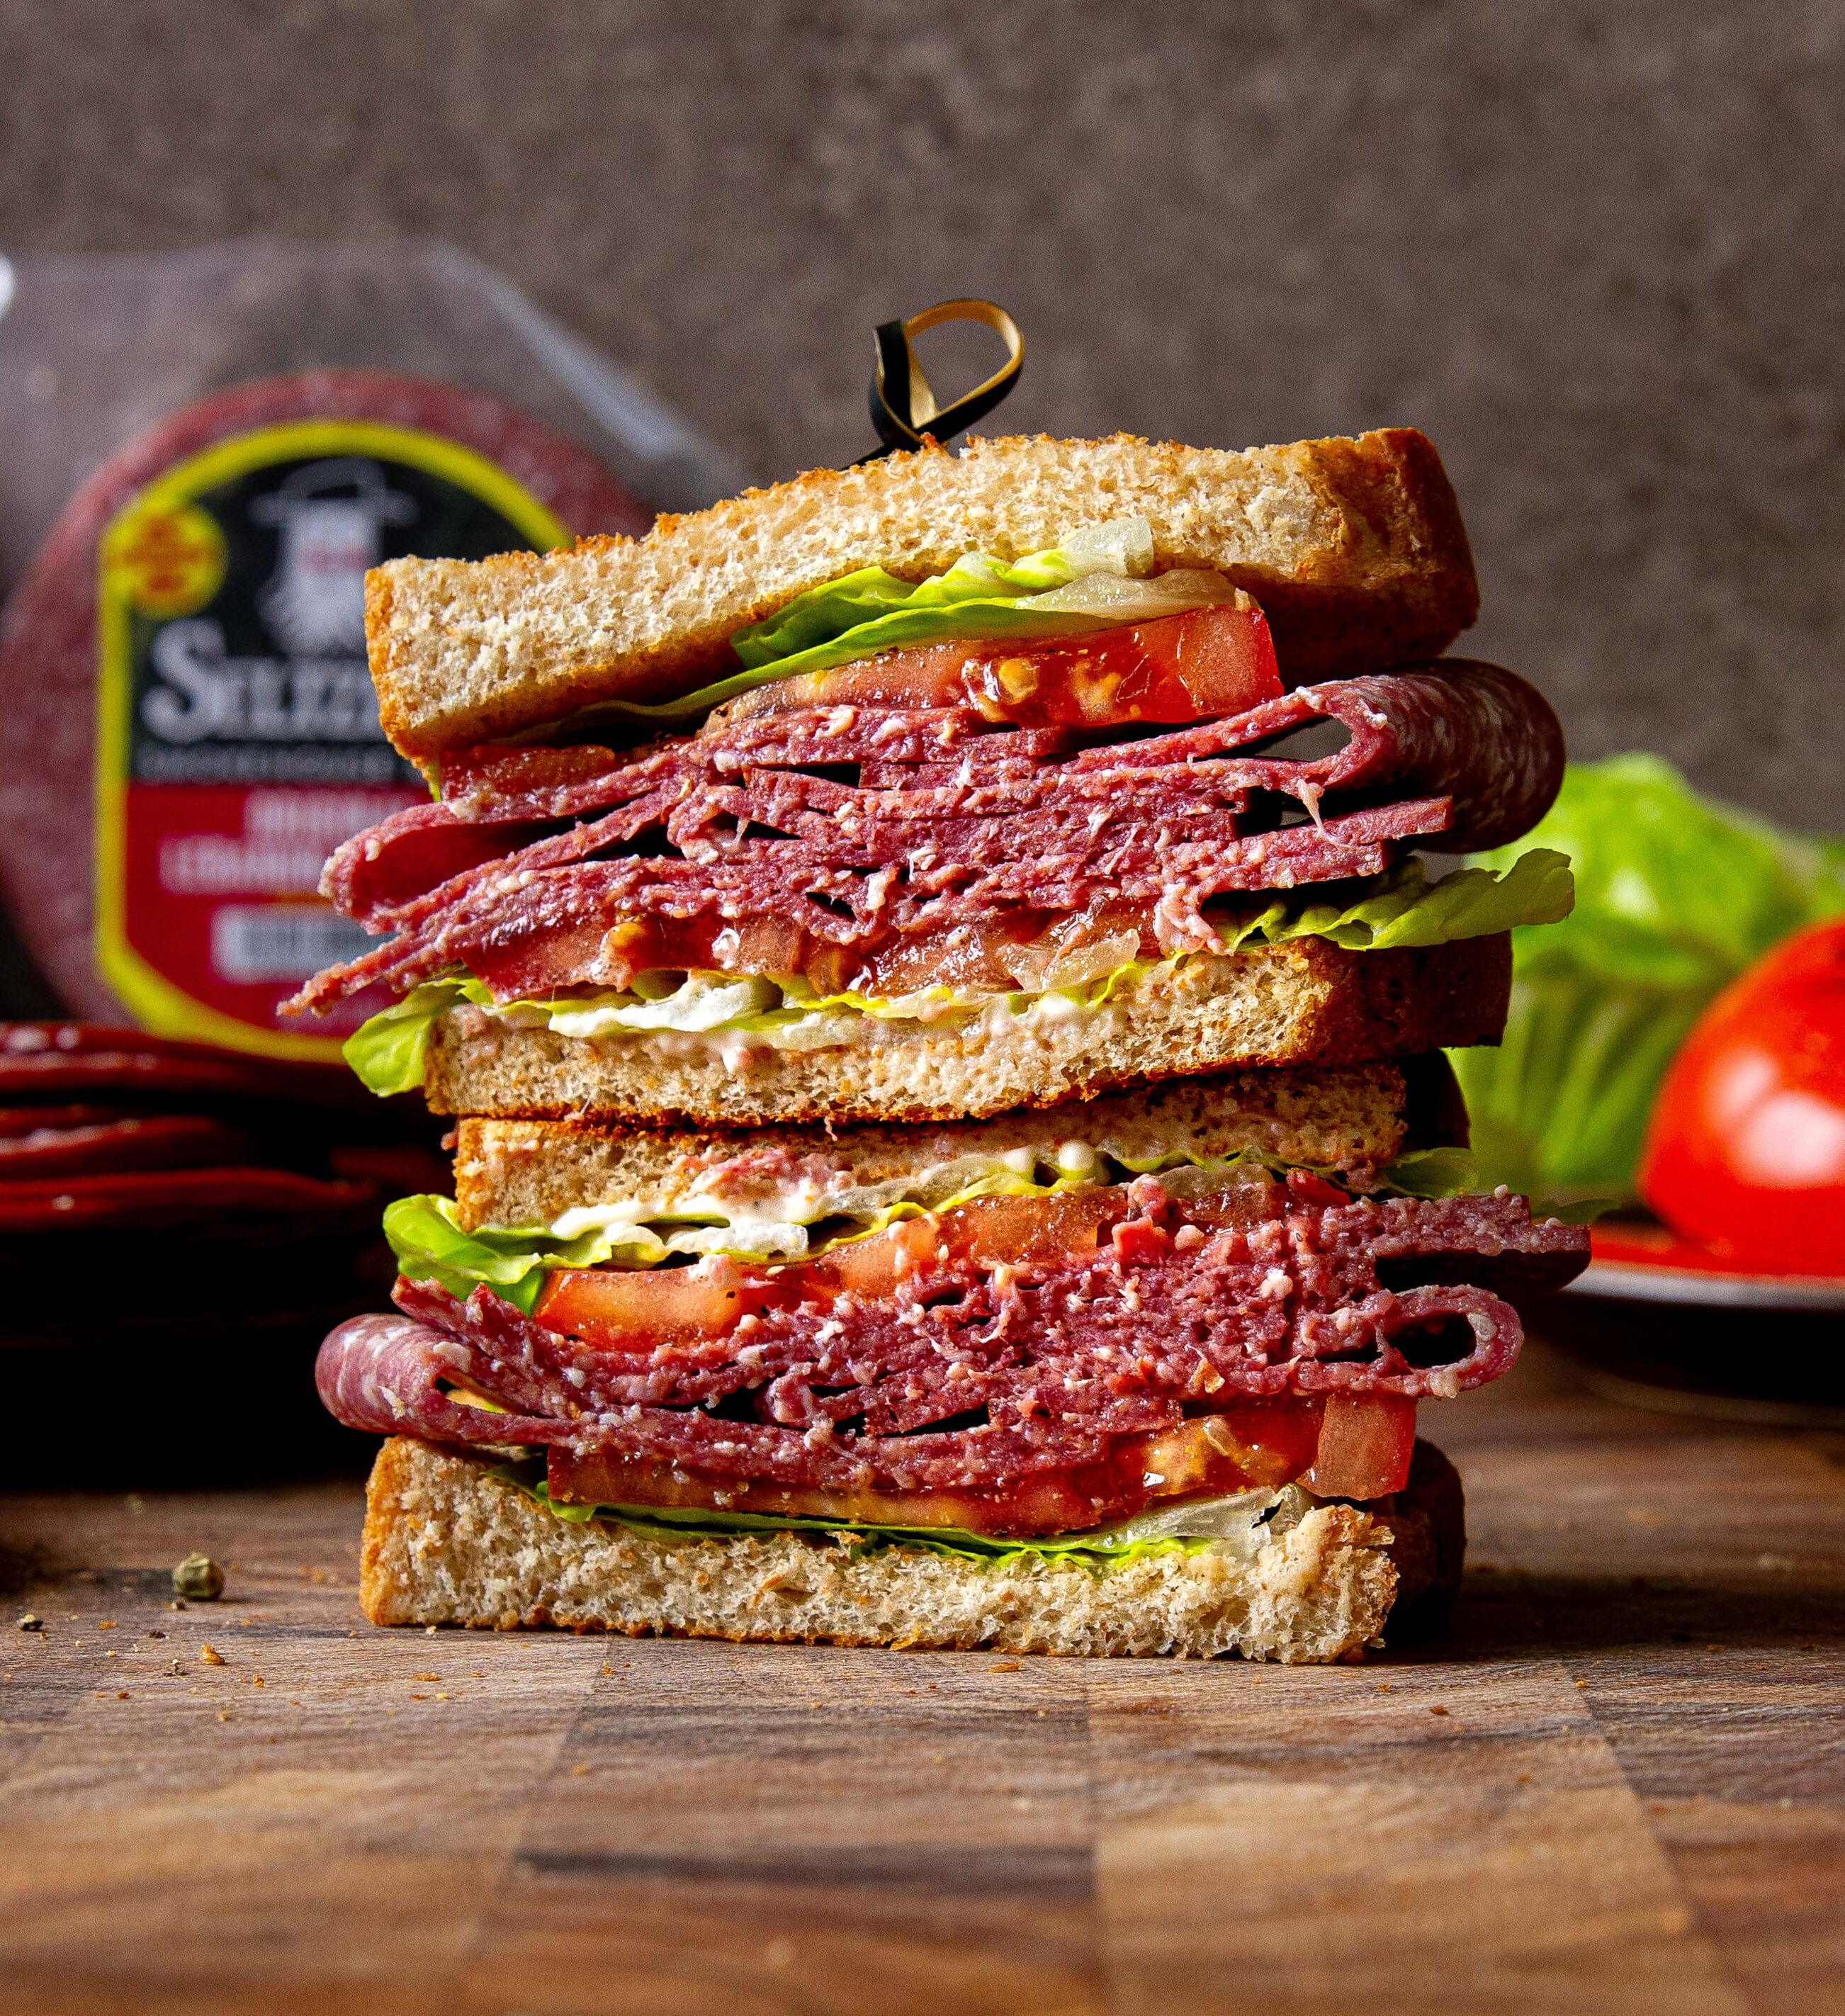 Bologna “BLT” Sandwich